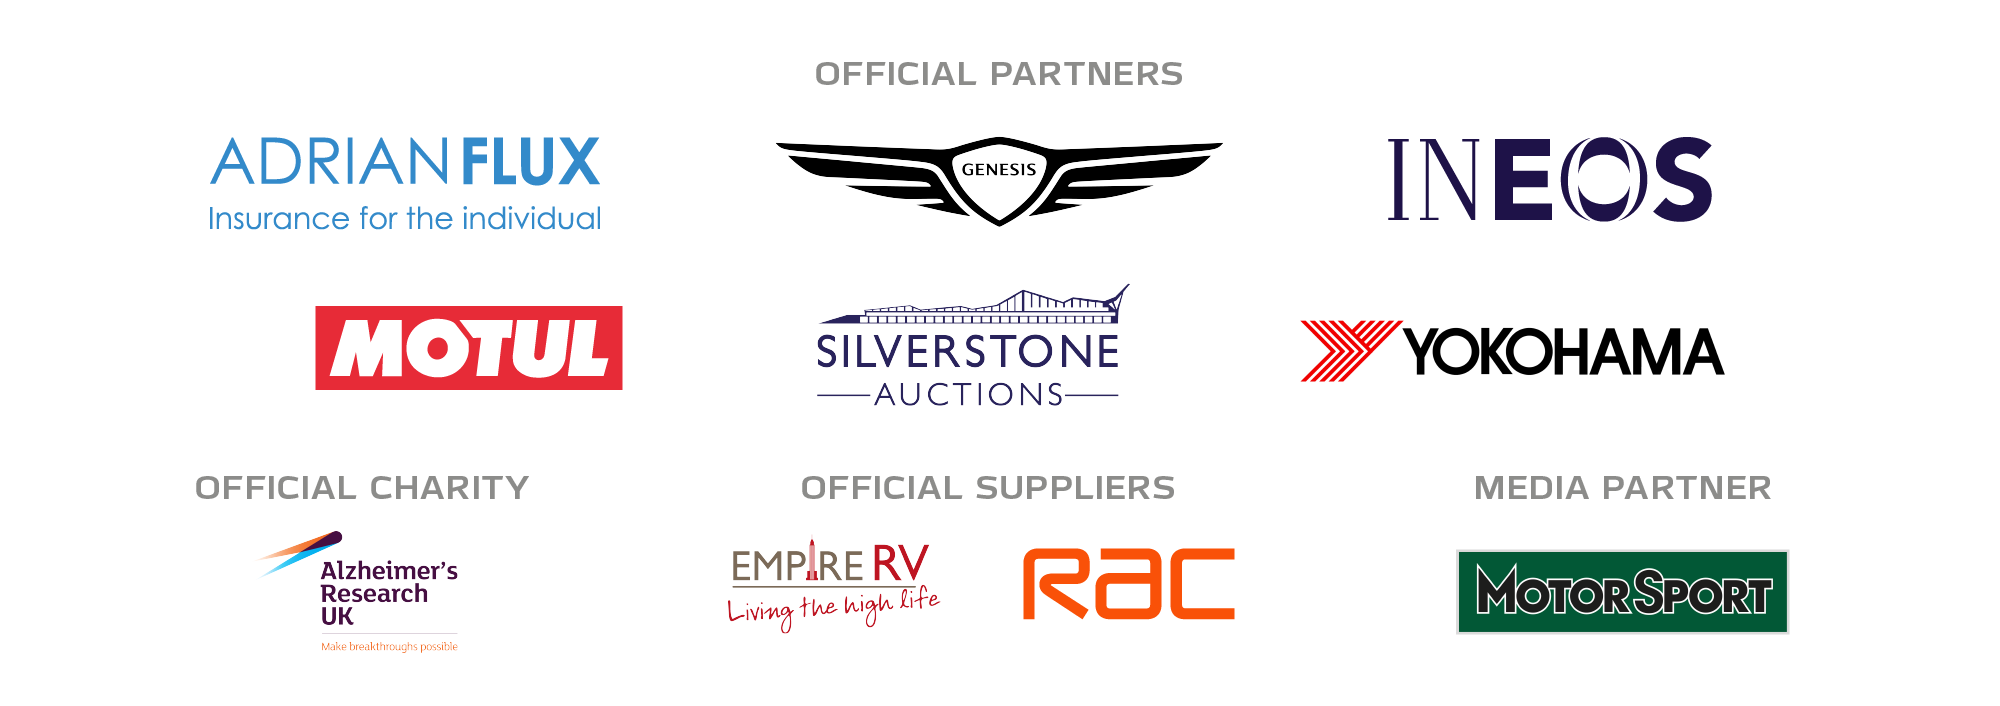 The Classic partner logos